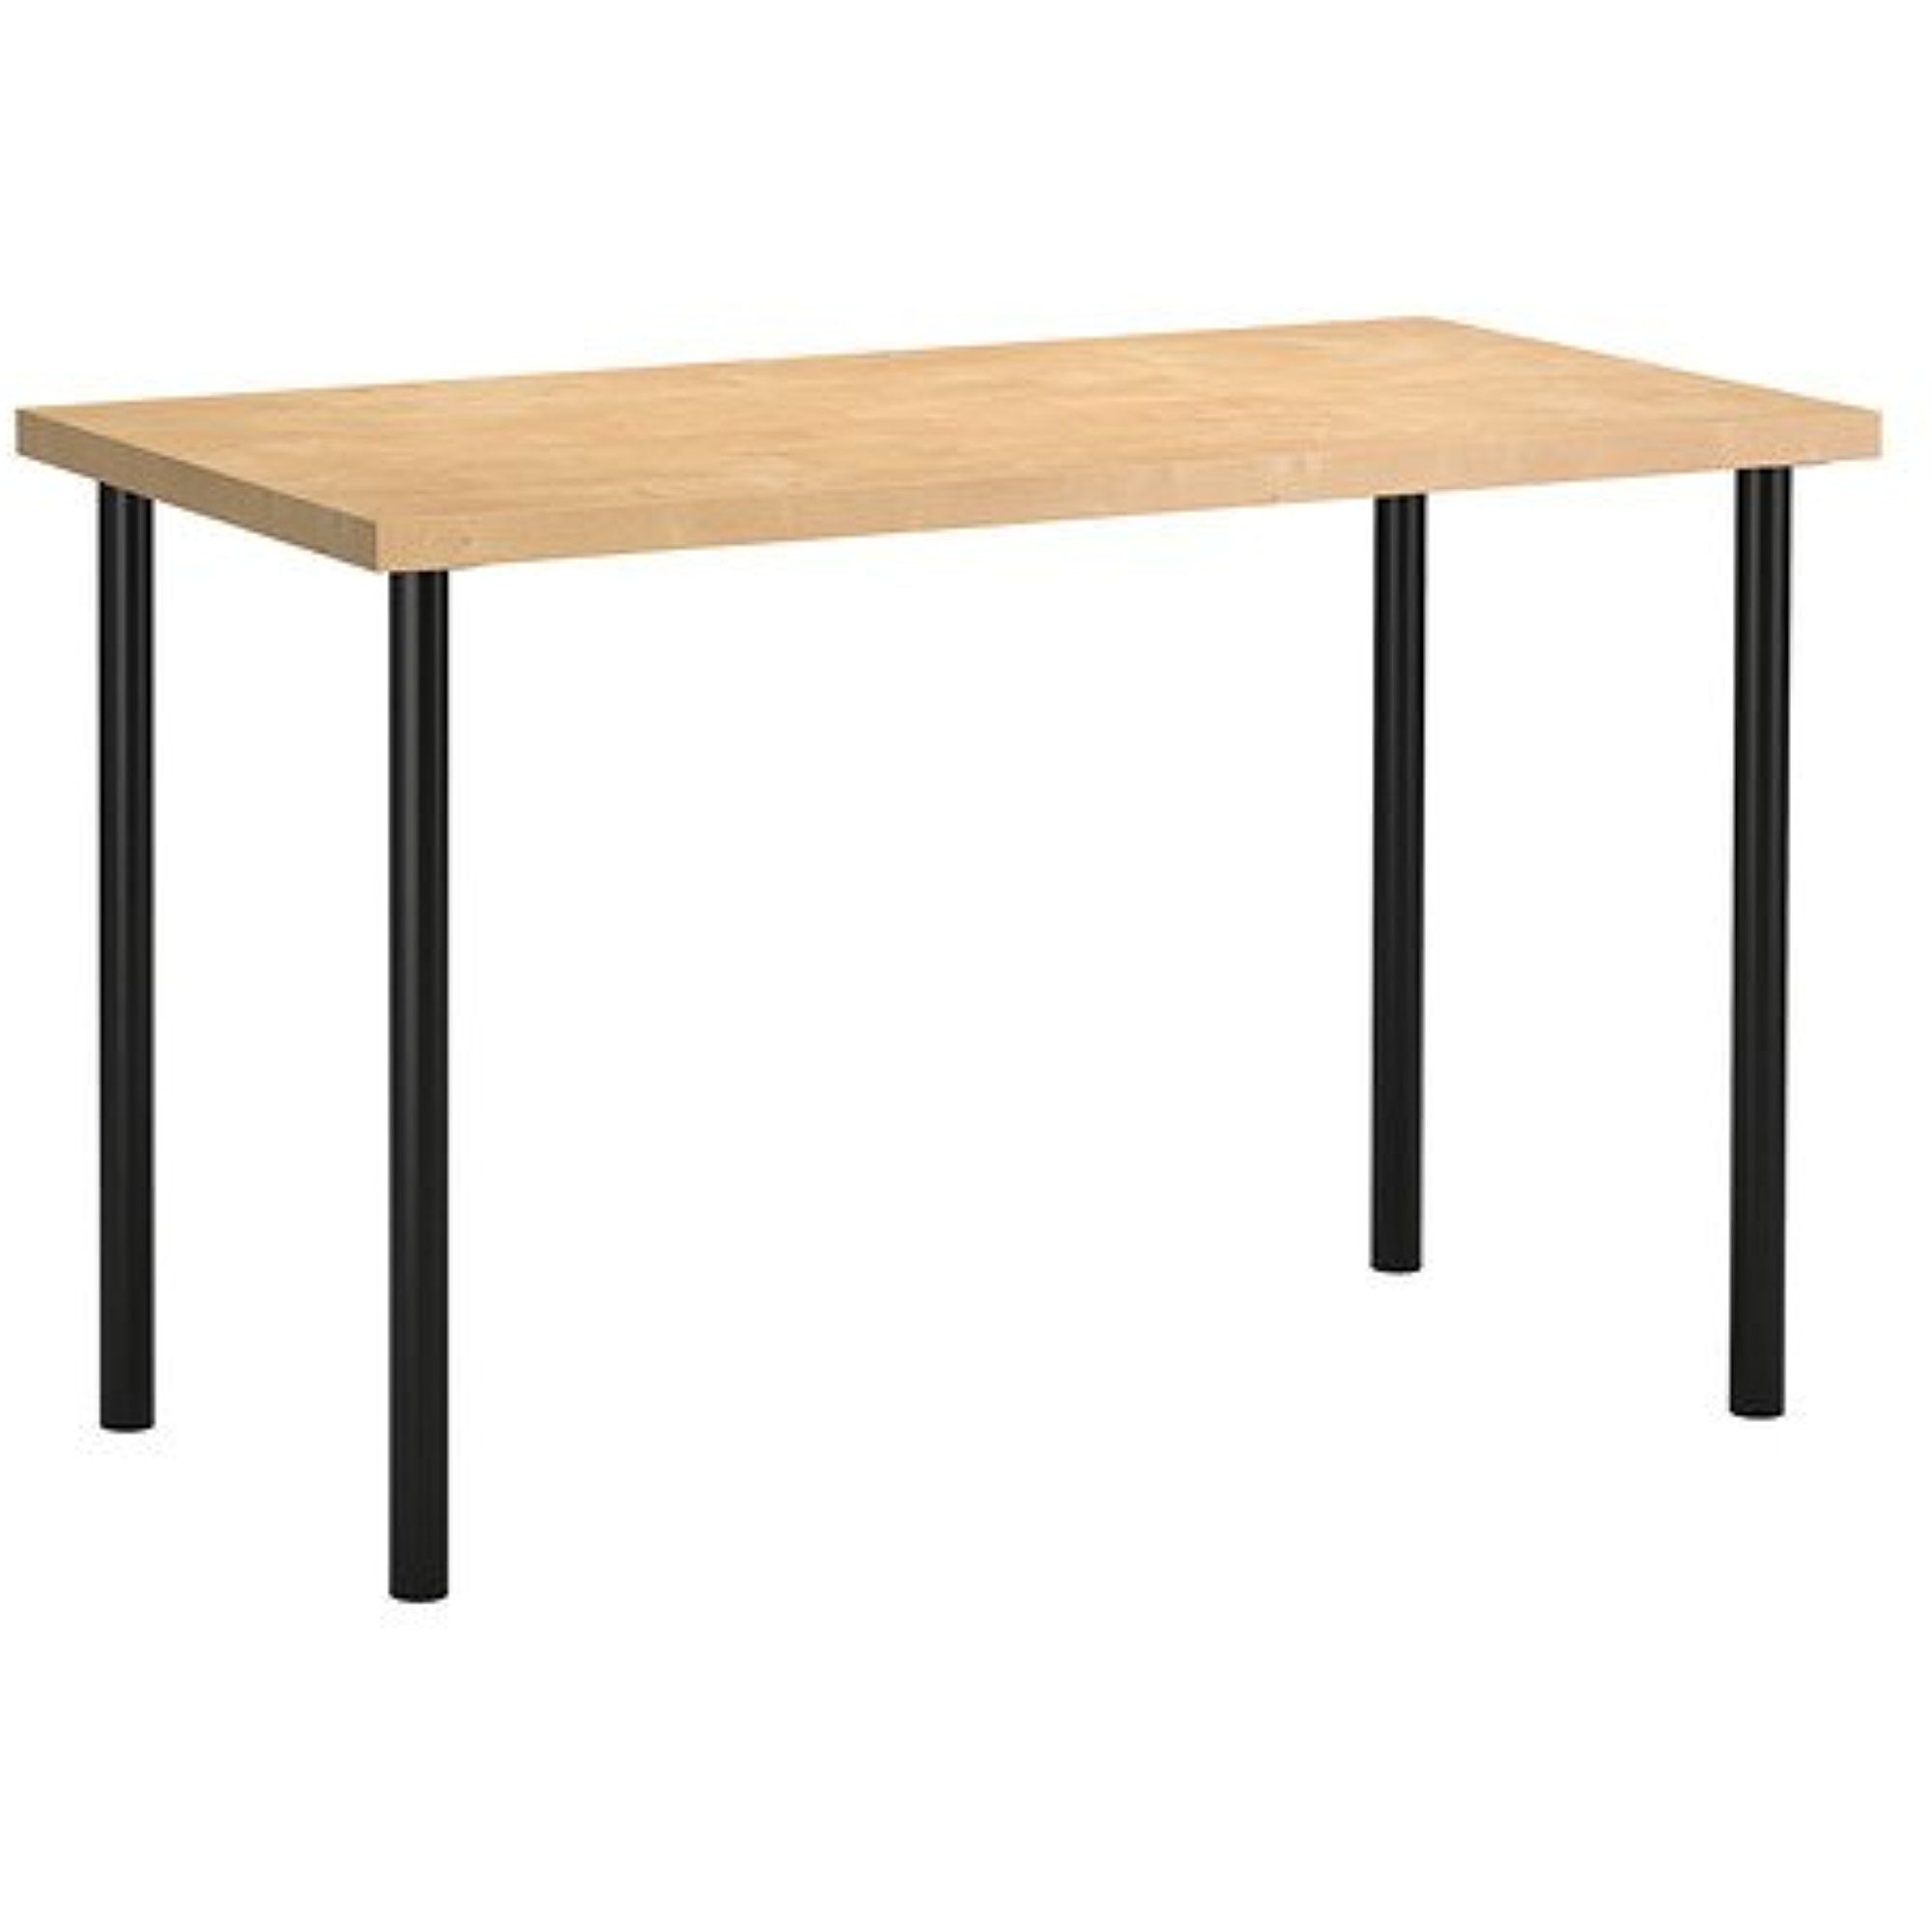 Ikea Adjustable Table, Birch Effect Top, Black Legs 102020. (View 14 of 15)